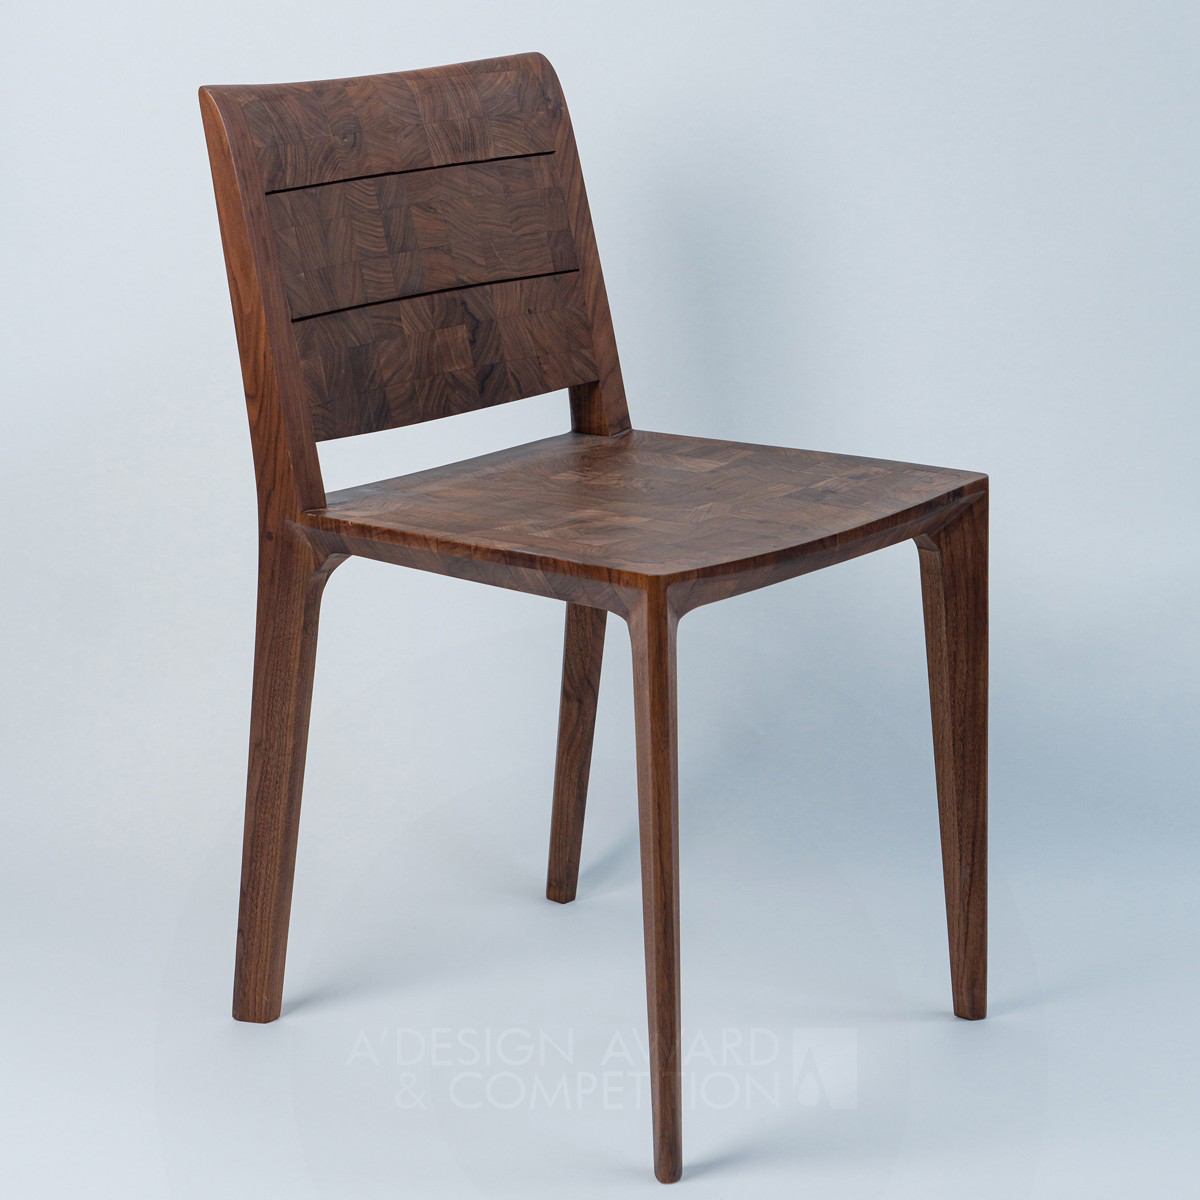 Promotion Chair by Beijing Yeak Tech Co. Ltd. Bronze Furniture Design Award Winner 2023 